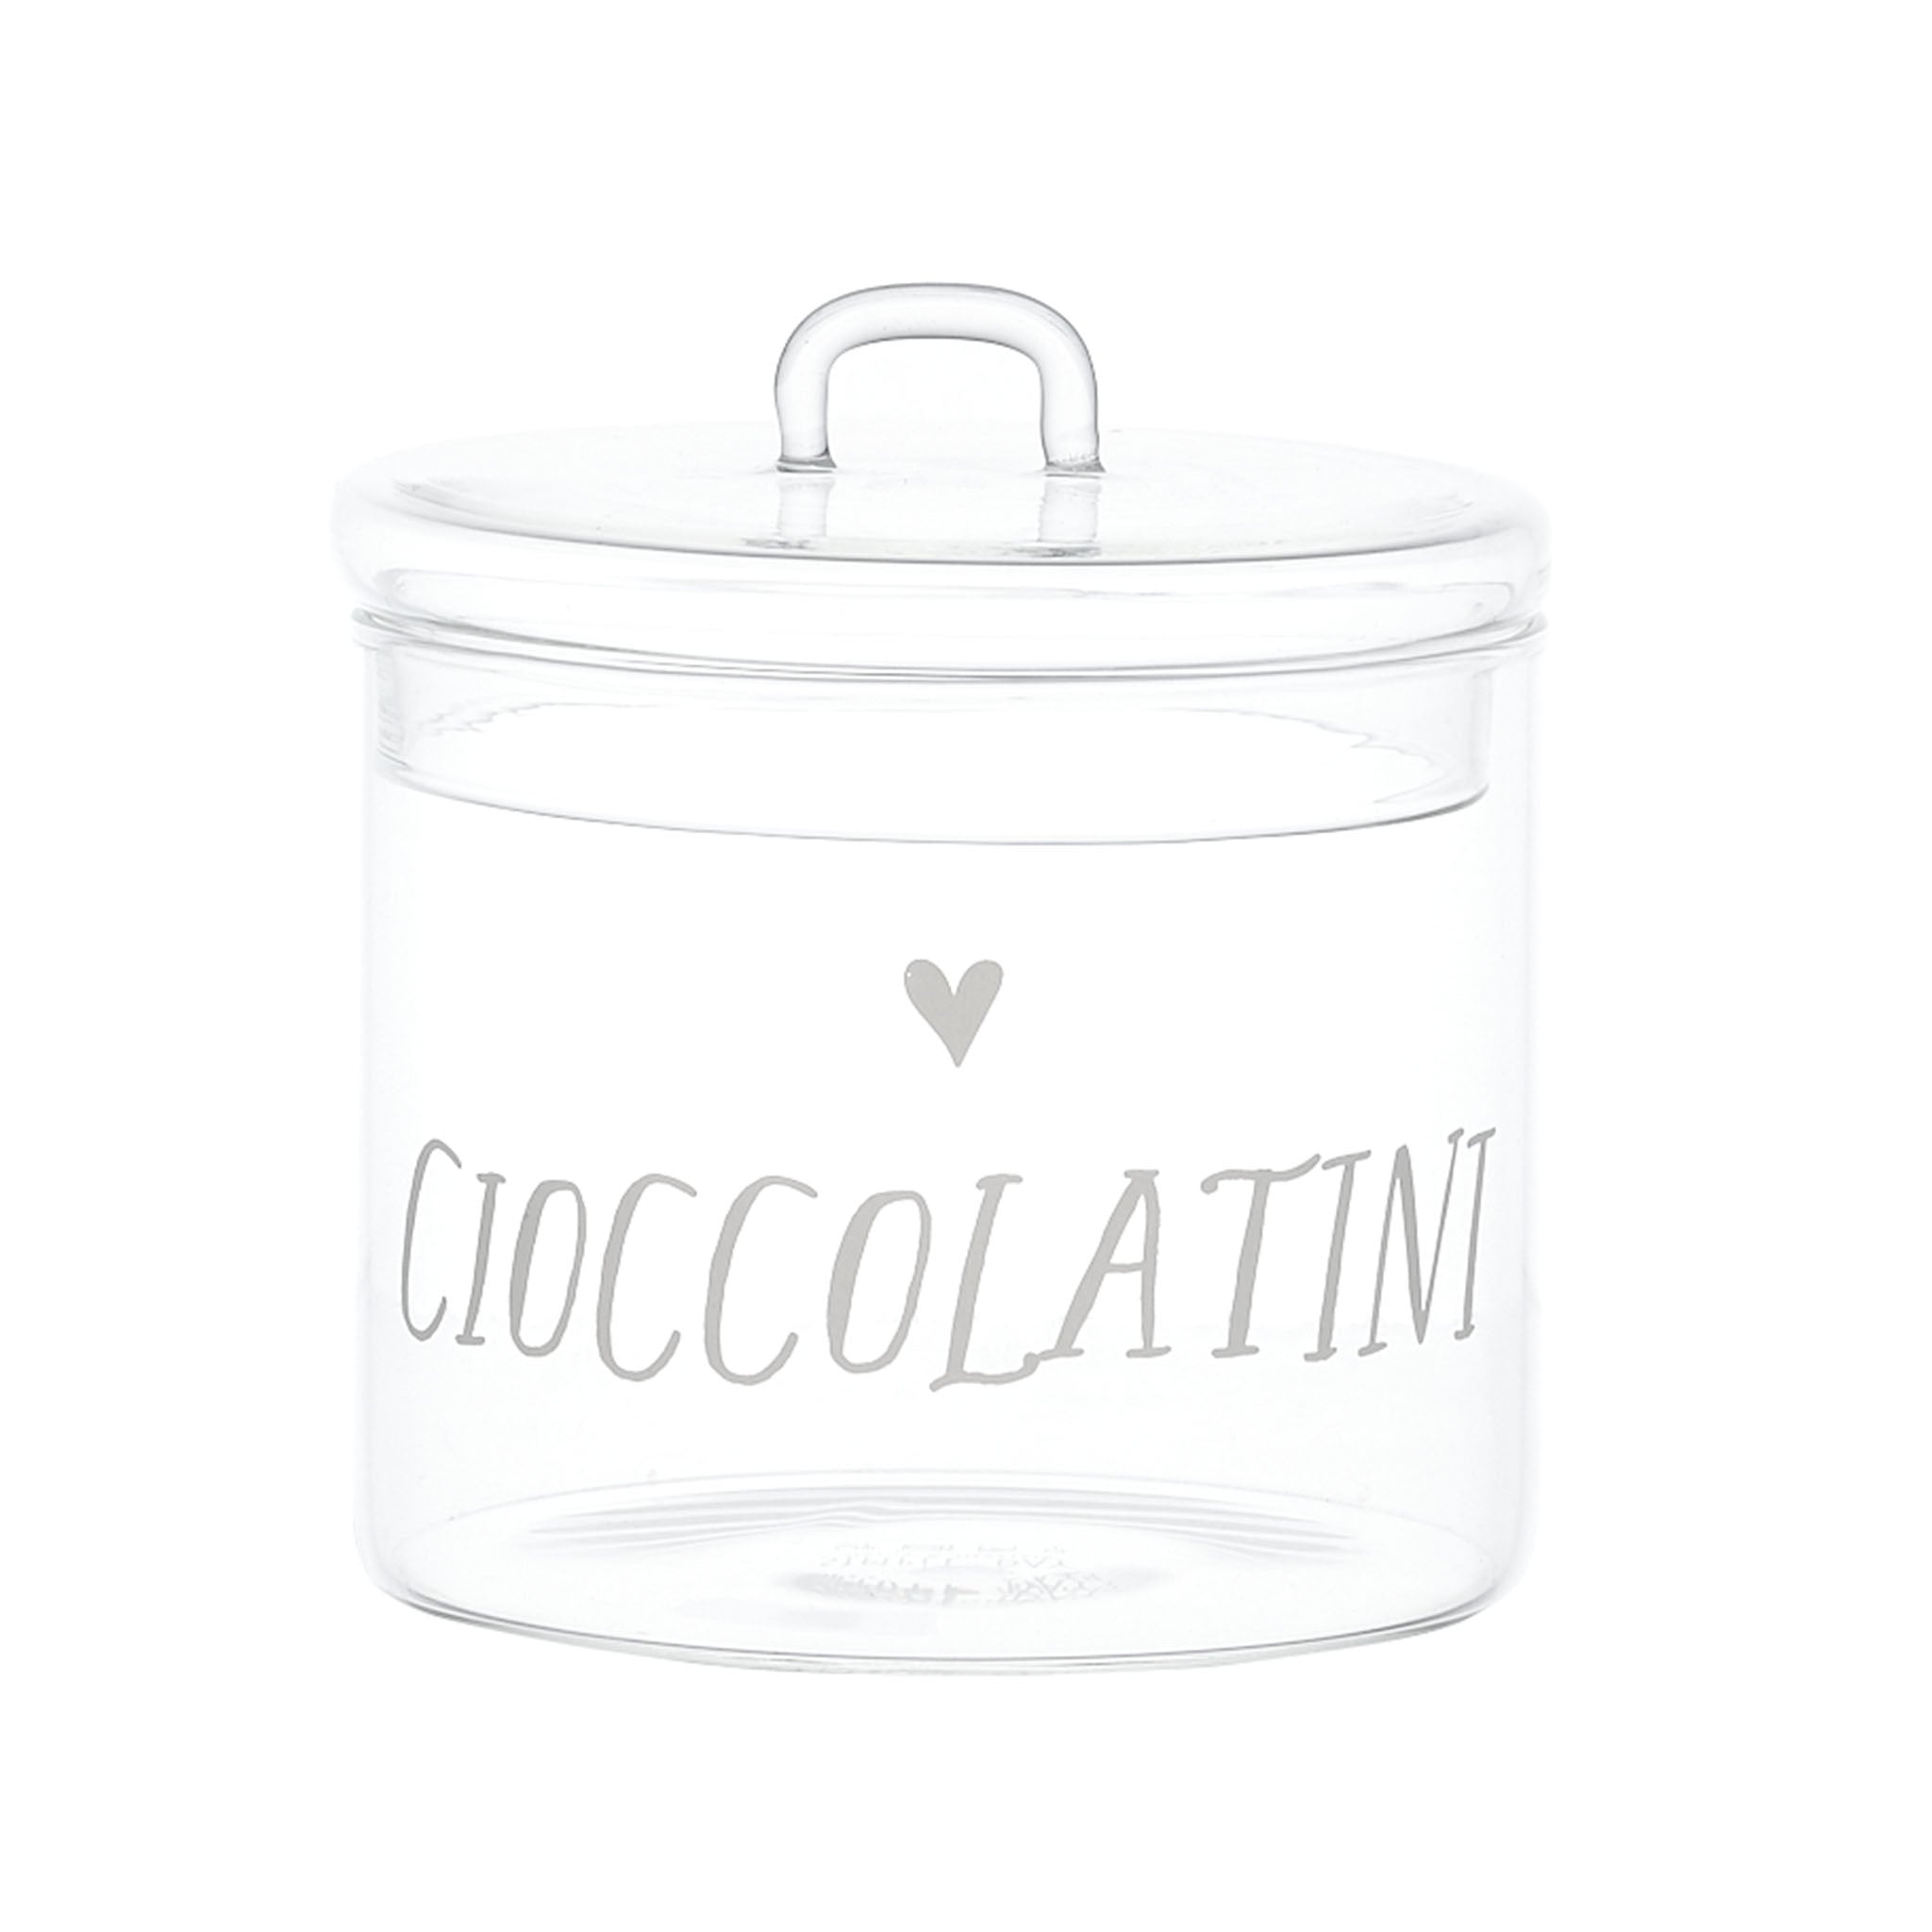 Cioccolatini chocolates Jar